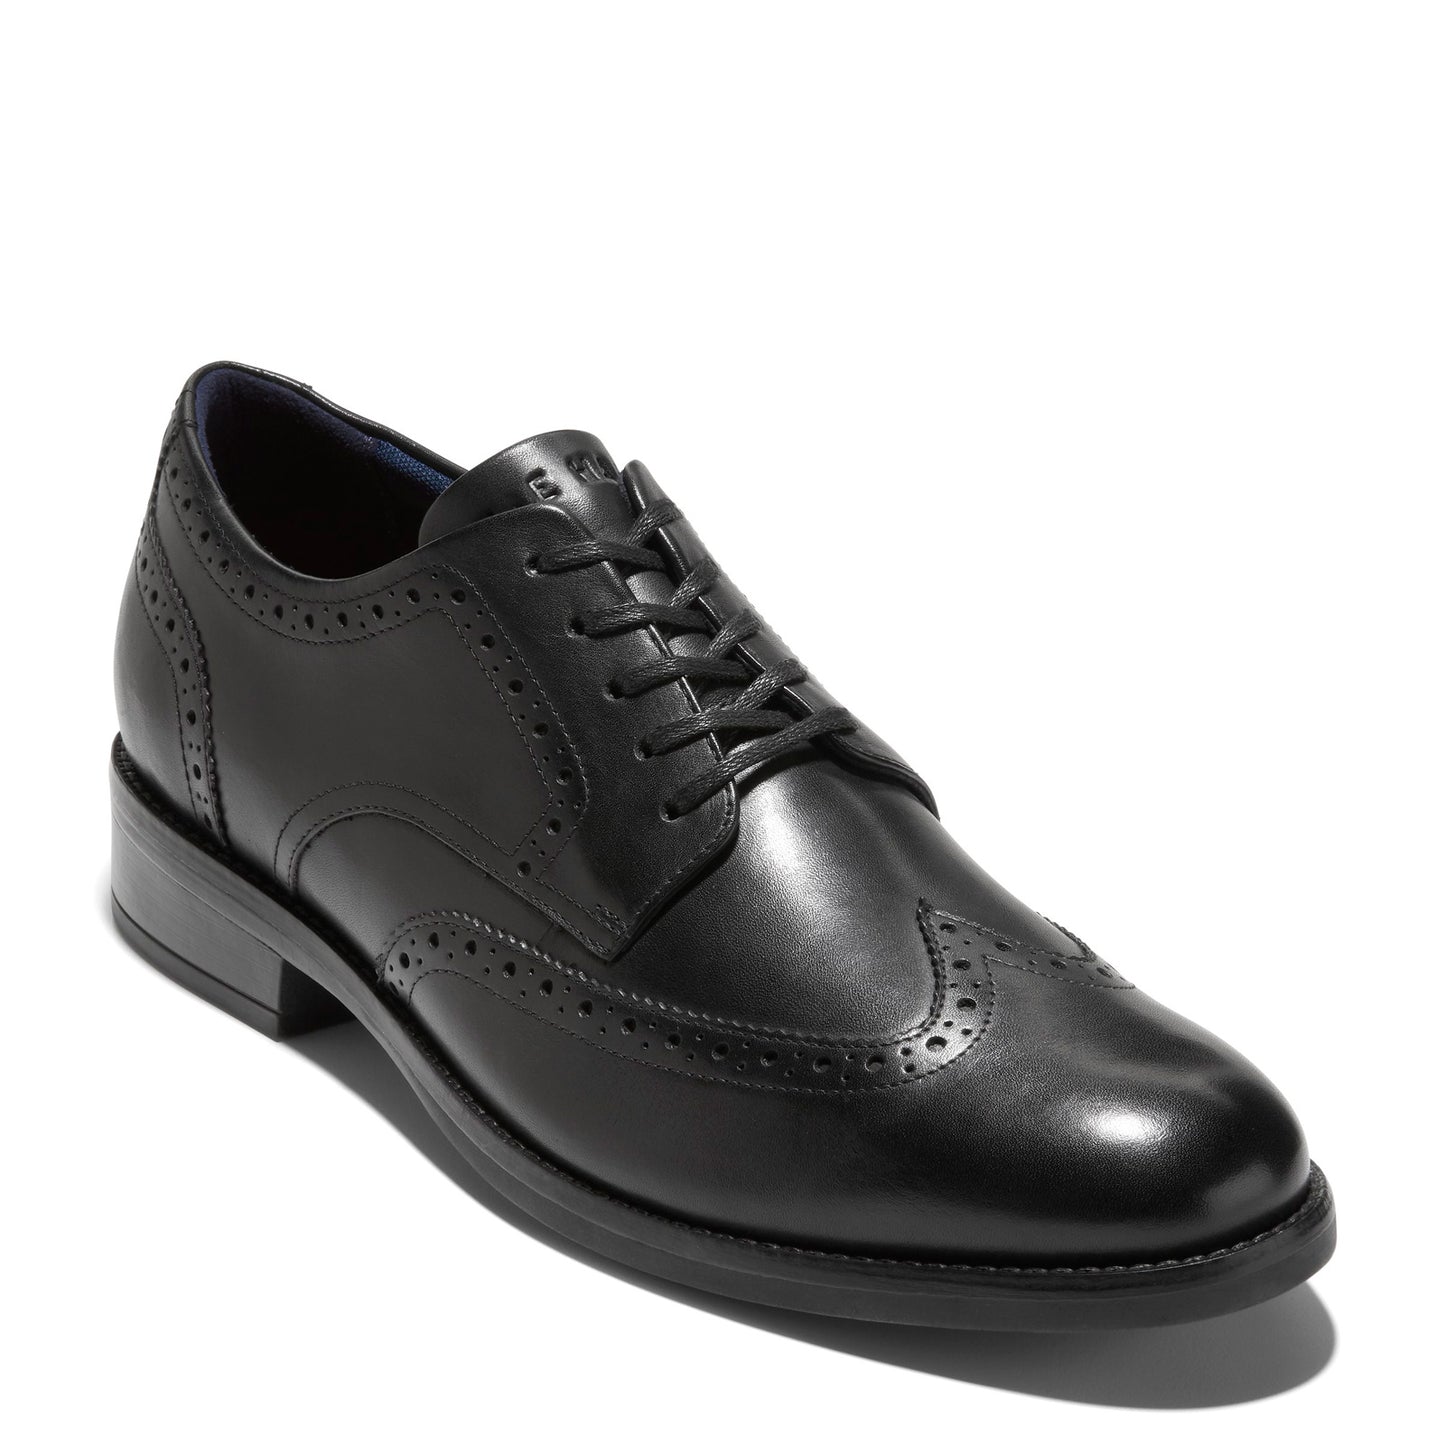 Peltz Shoes  Men's Cole Haan Grand+ Wingtip Oxford Black C37329